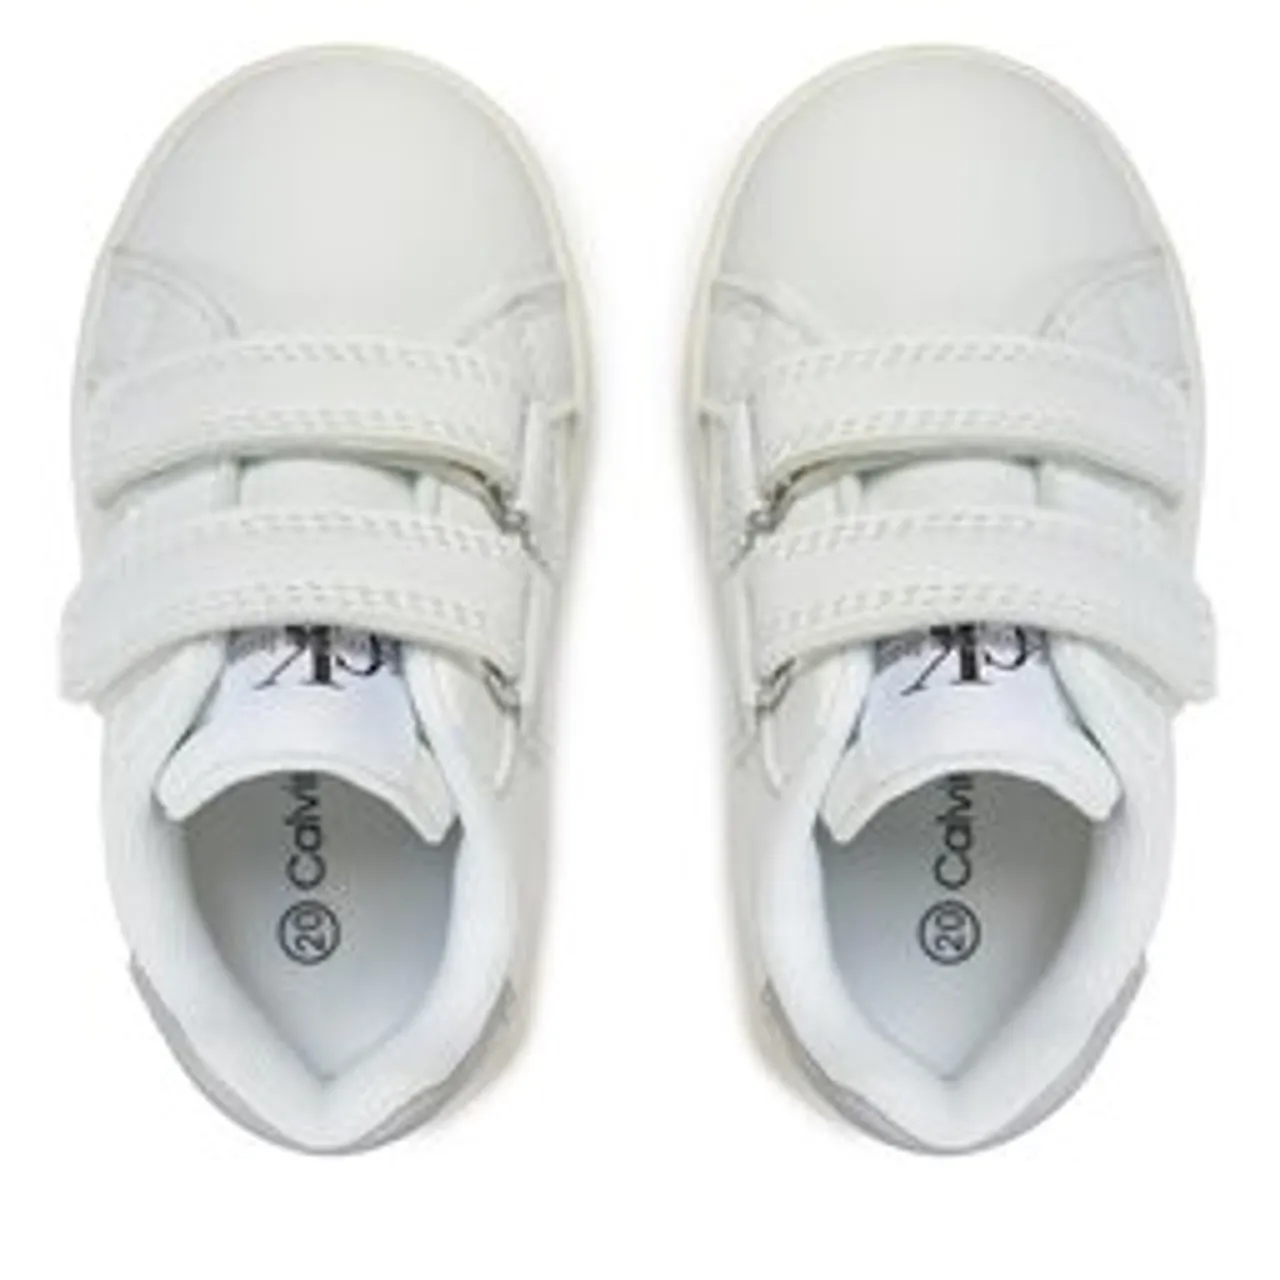 Sneakers Calvin Klein Jeans V1X9-80853-1355X M White/Grey 092